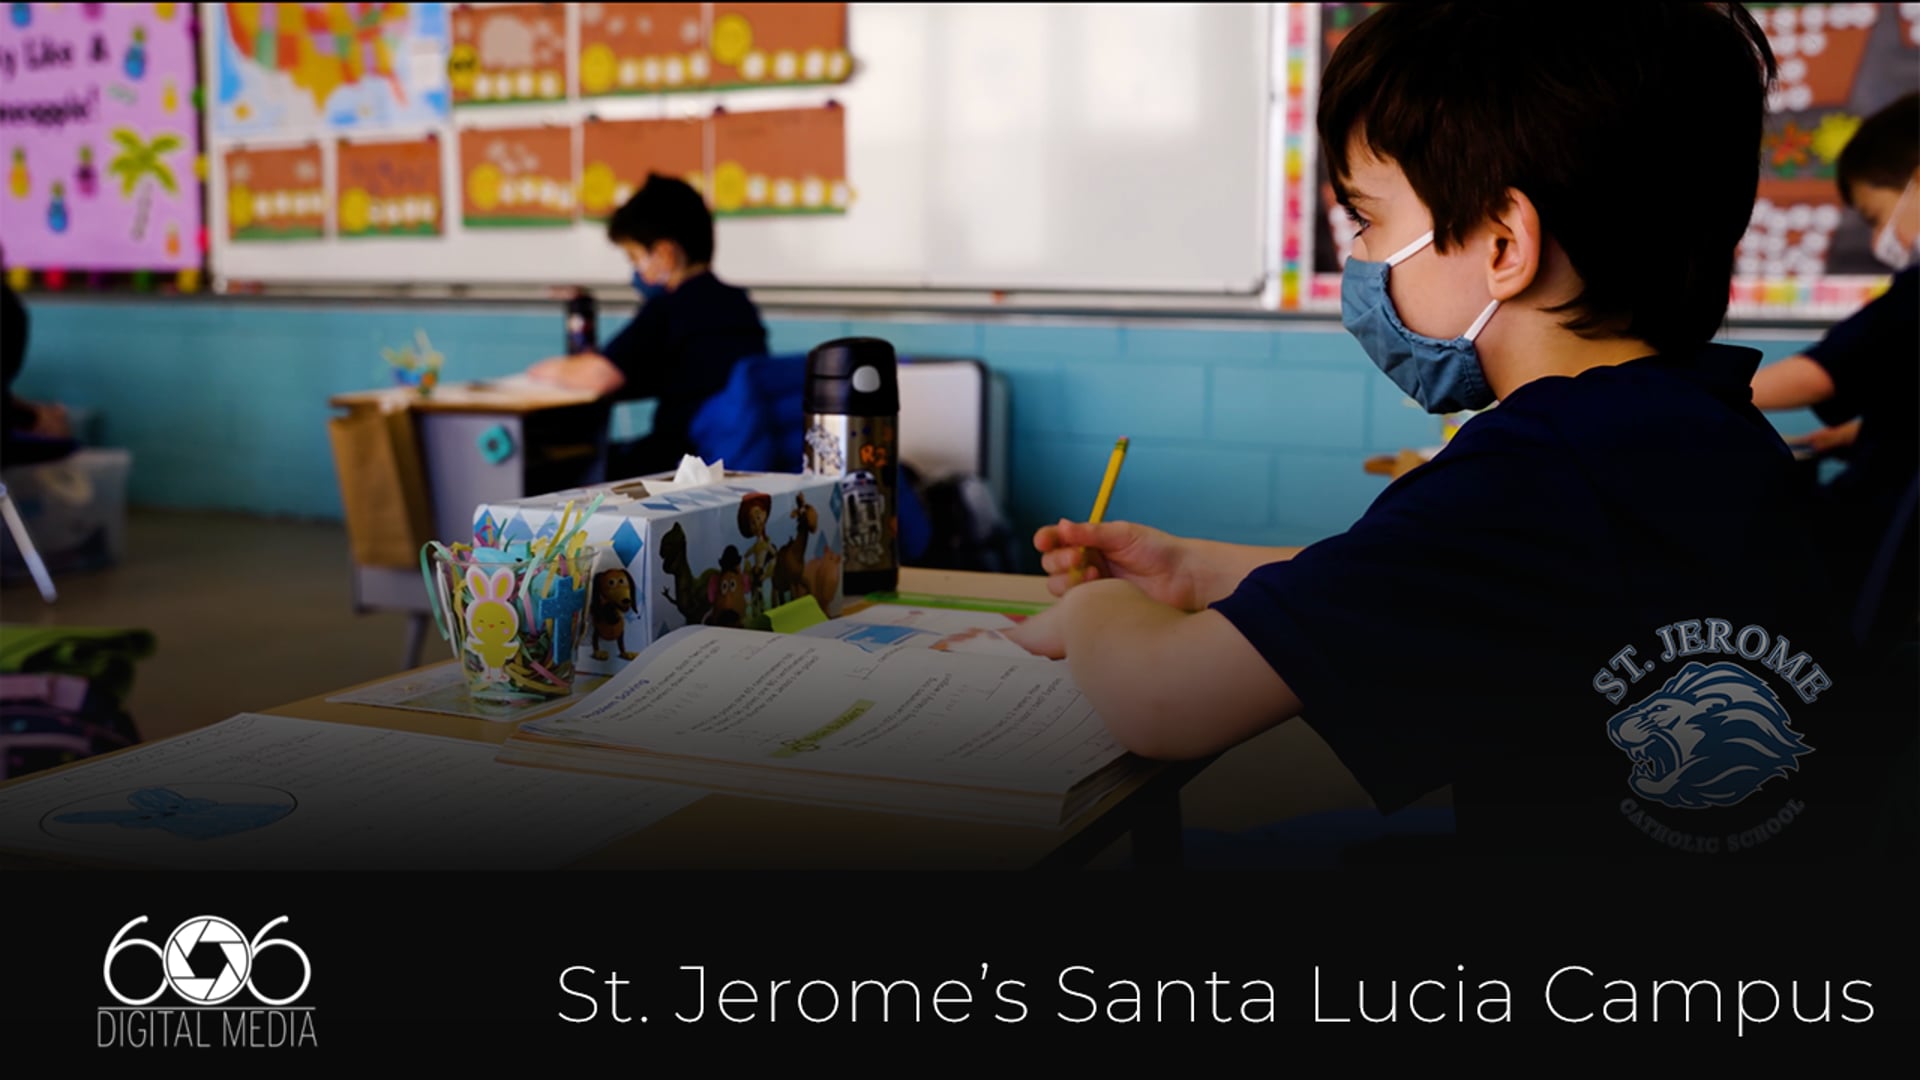 St. Jerome's Santa Lucia Campus